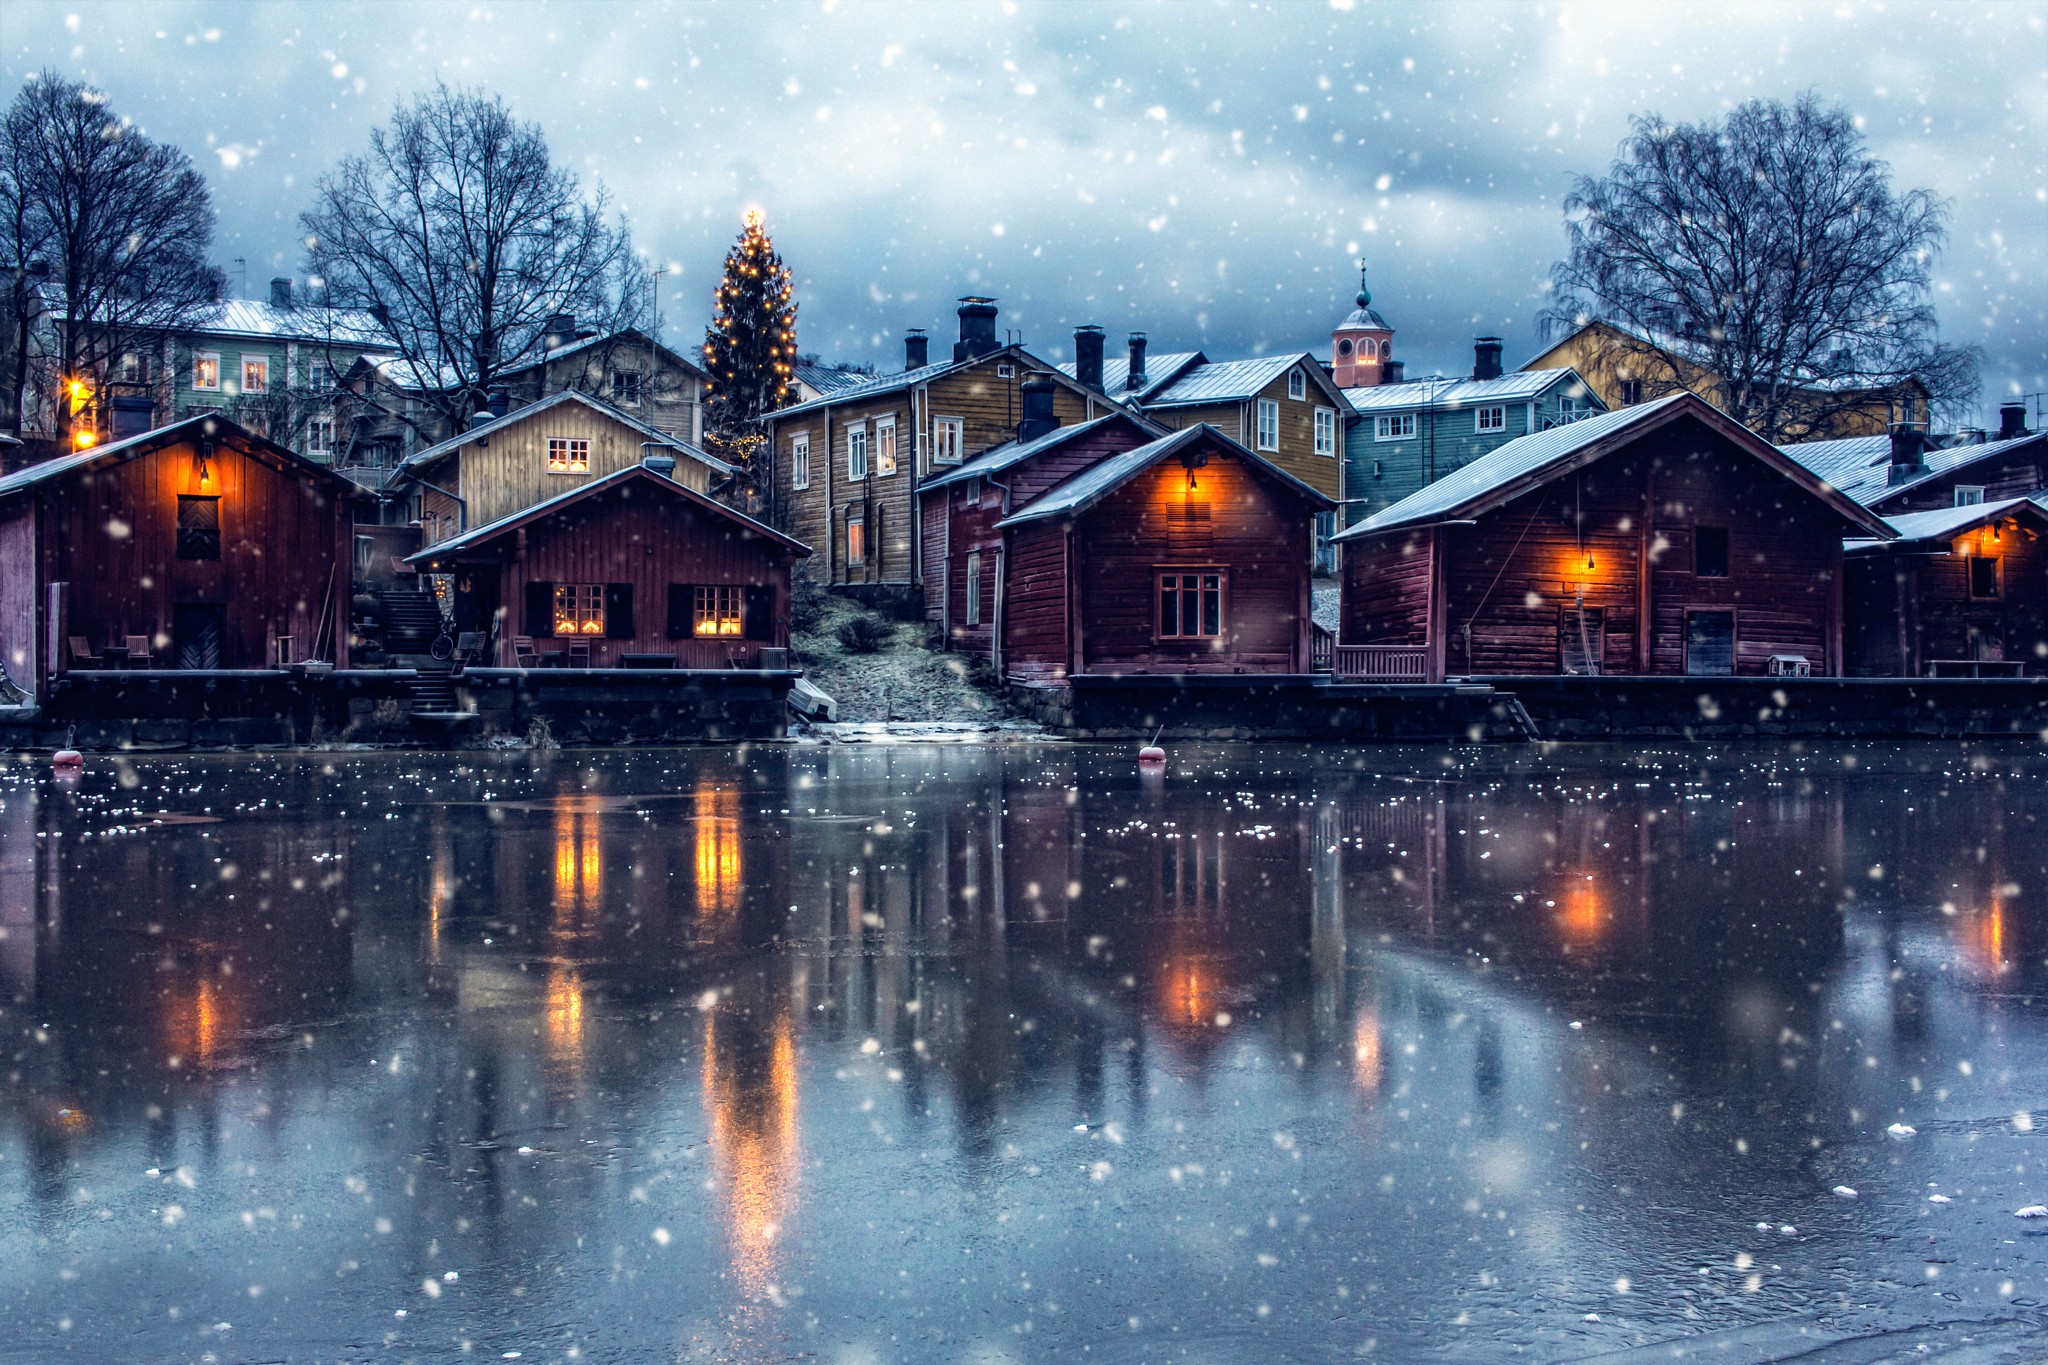 General 2048x1365 Finland winter village town snowflakes snowing ice house Porvoo idyllic